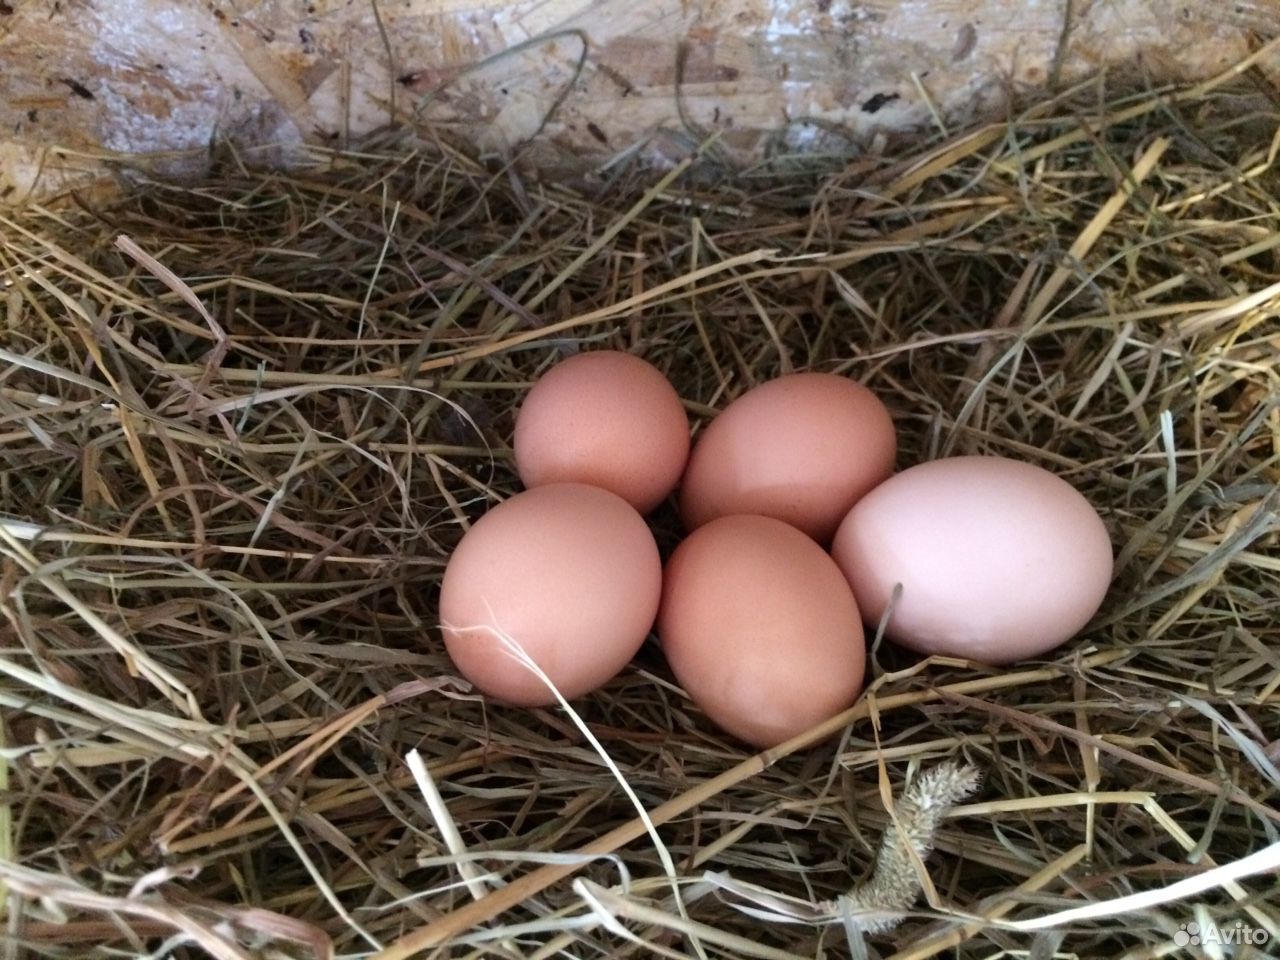 Чешский Доминант яйца. Пудровое яйцо от чешского Доминанта. Куплю инкубационное яйцо доминанта